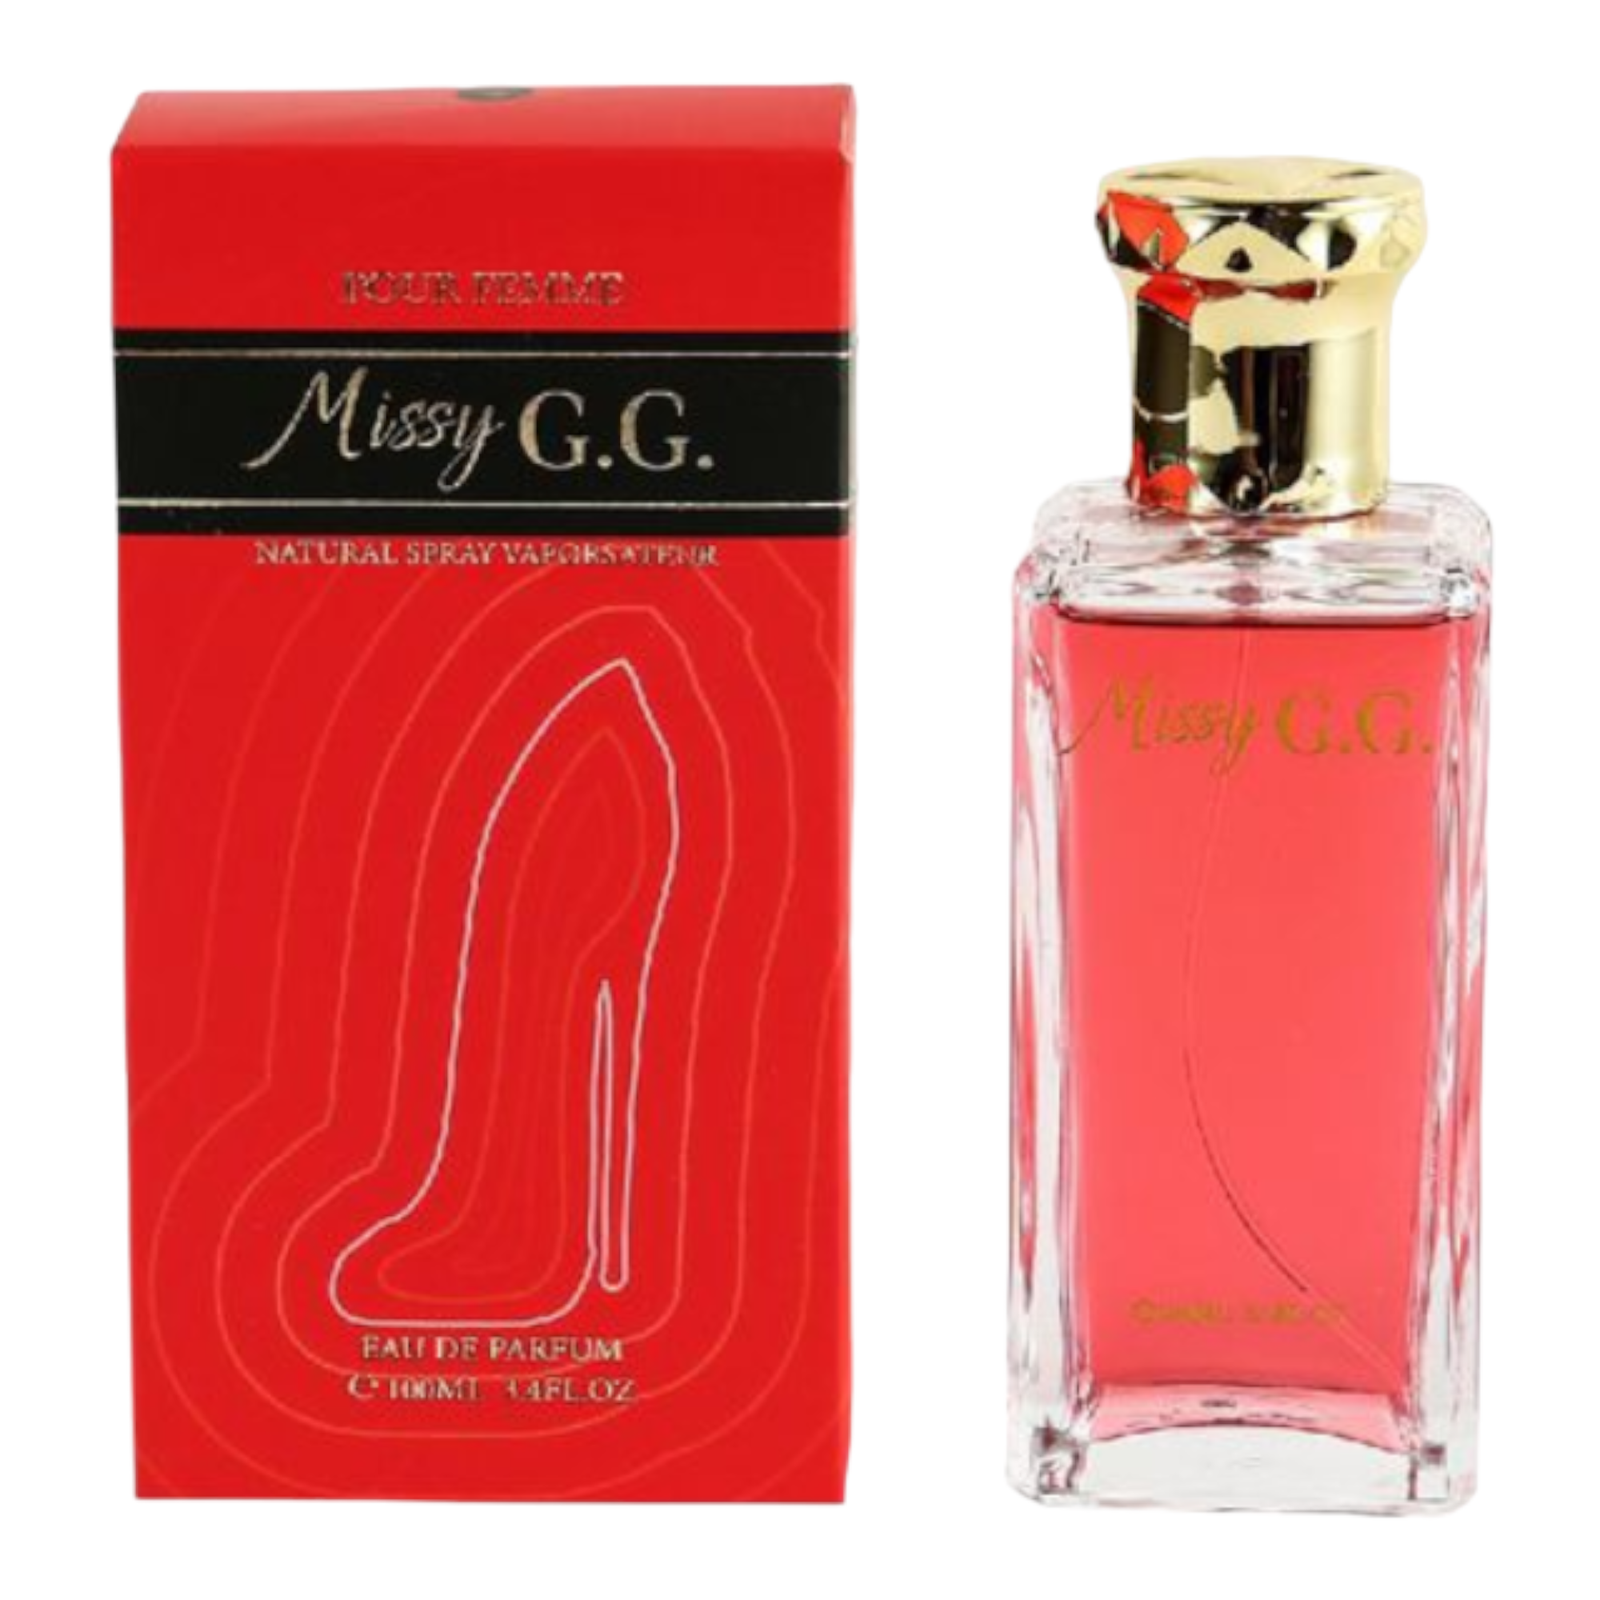 MISSY GG por mayor - Perfumes por mayor